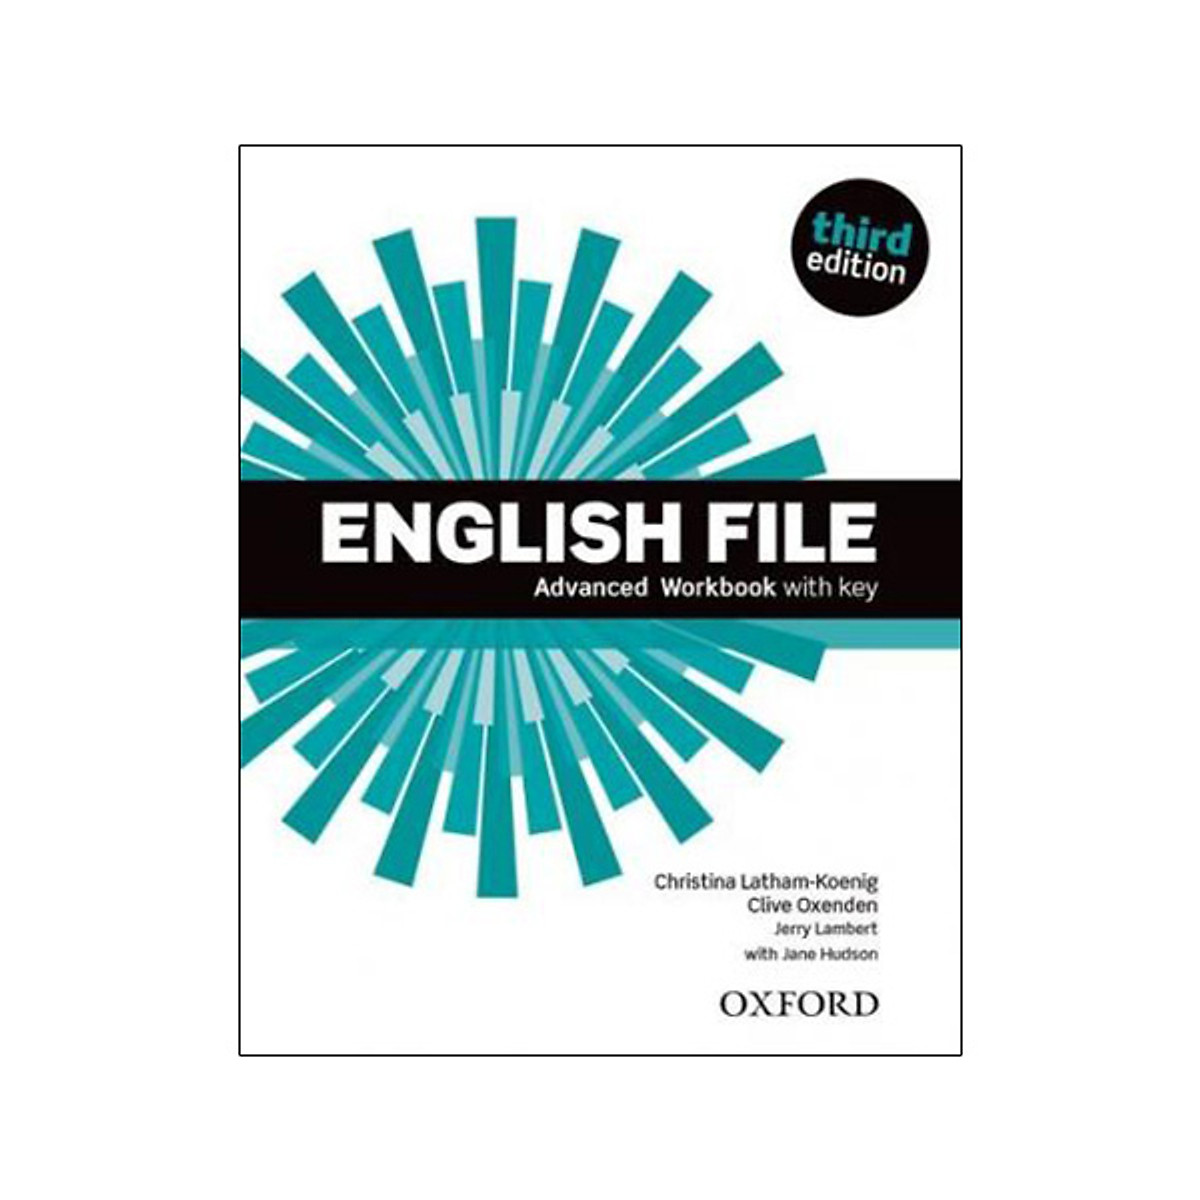 English file intermediate workbook keys. English file 3 издание pre-Intermediate. English file Intermediate 4rd Edition. Учебник pre Intermediate Oxford. English file third Edition (3 издание) - pre-Intermediate.